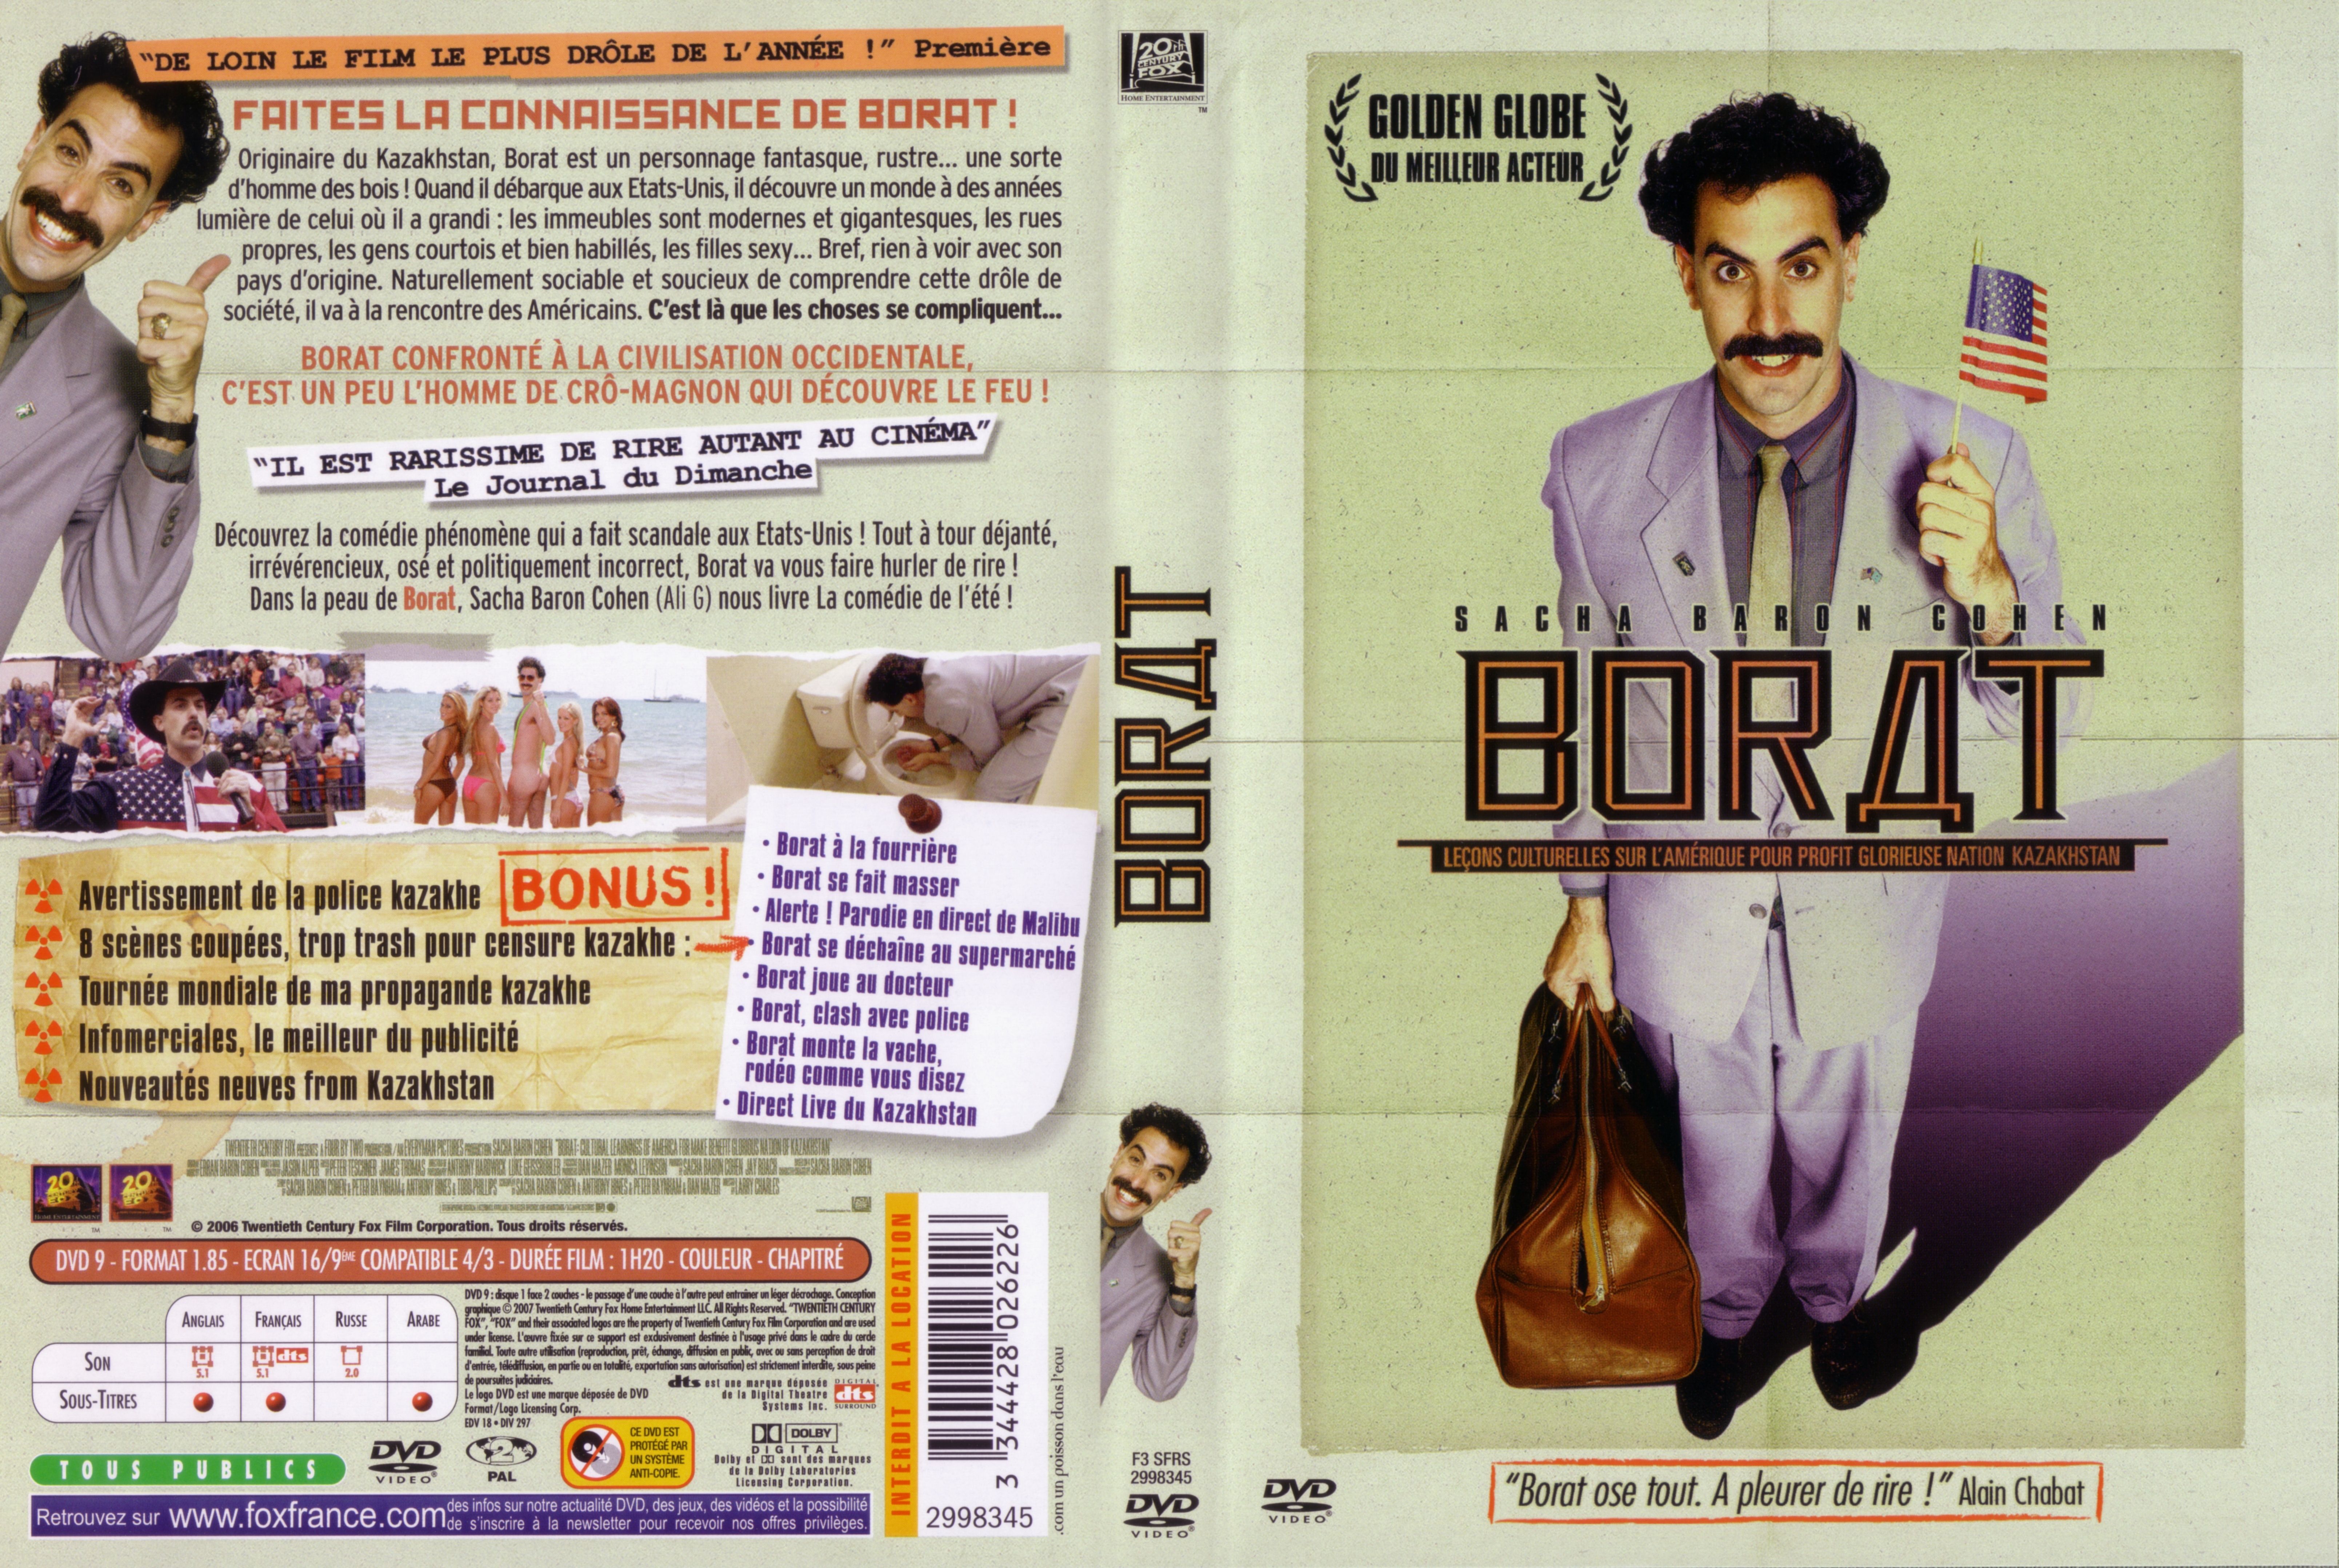 Jaquette DVD Borat v3